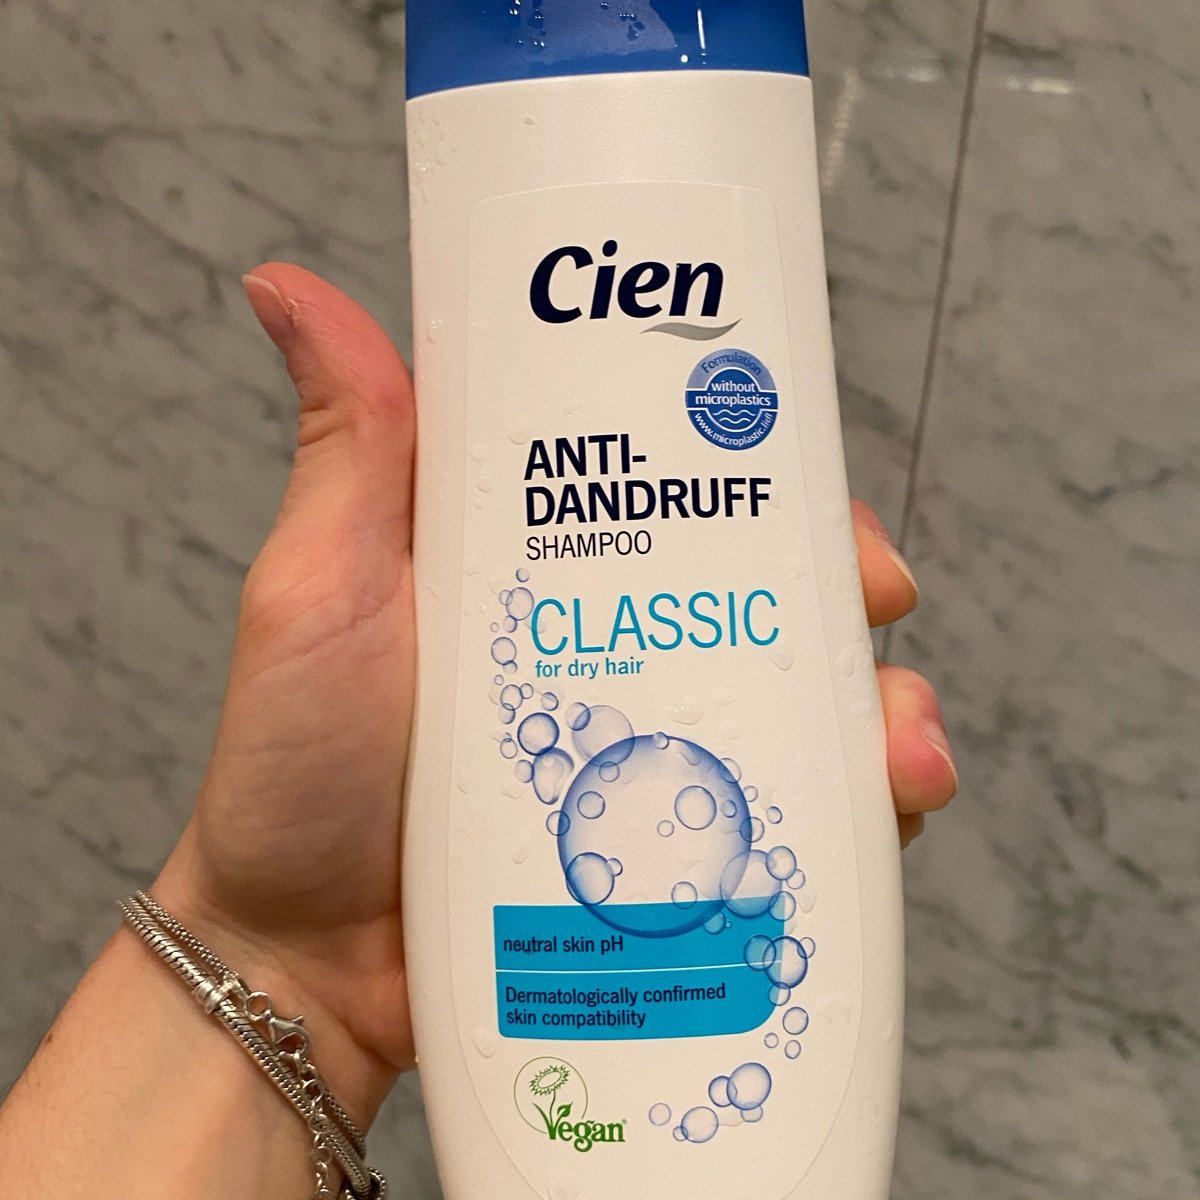 Cien Shampoo anti-dandruff classic Review | abillion